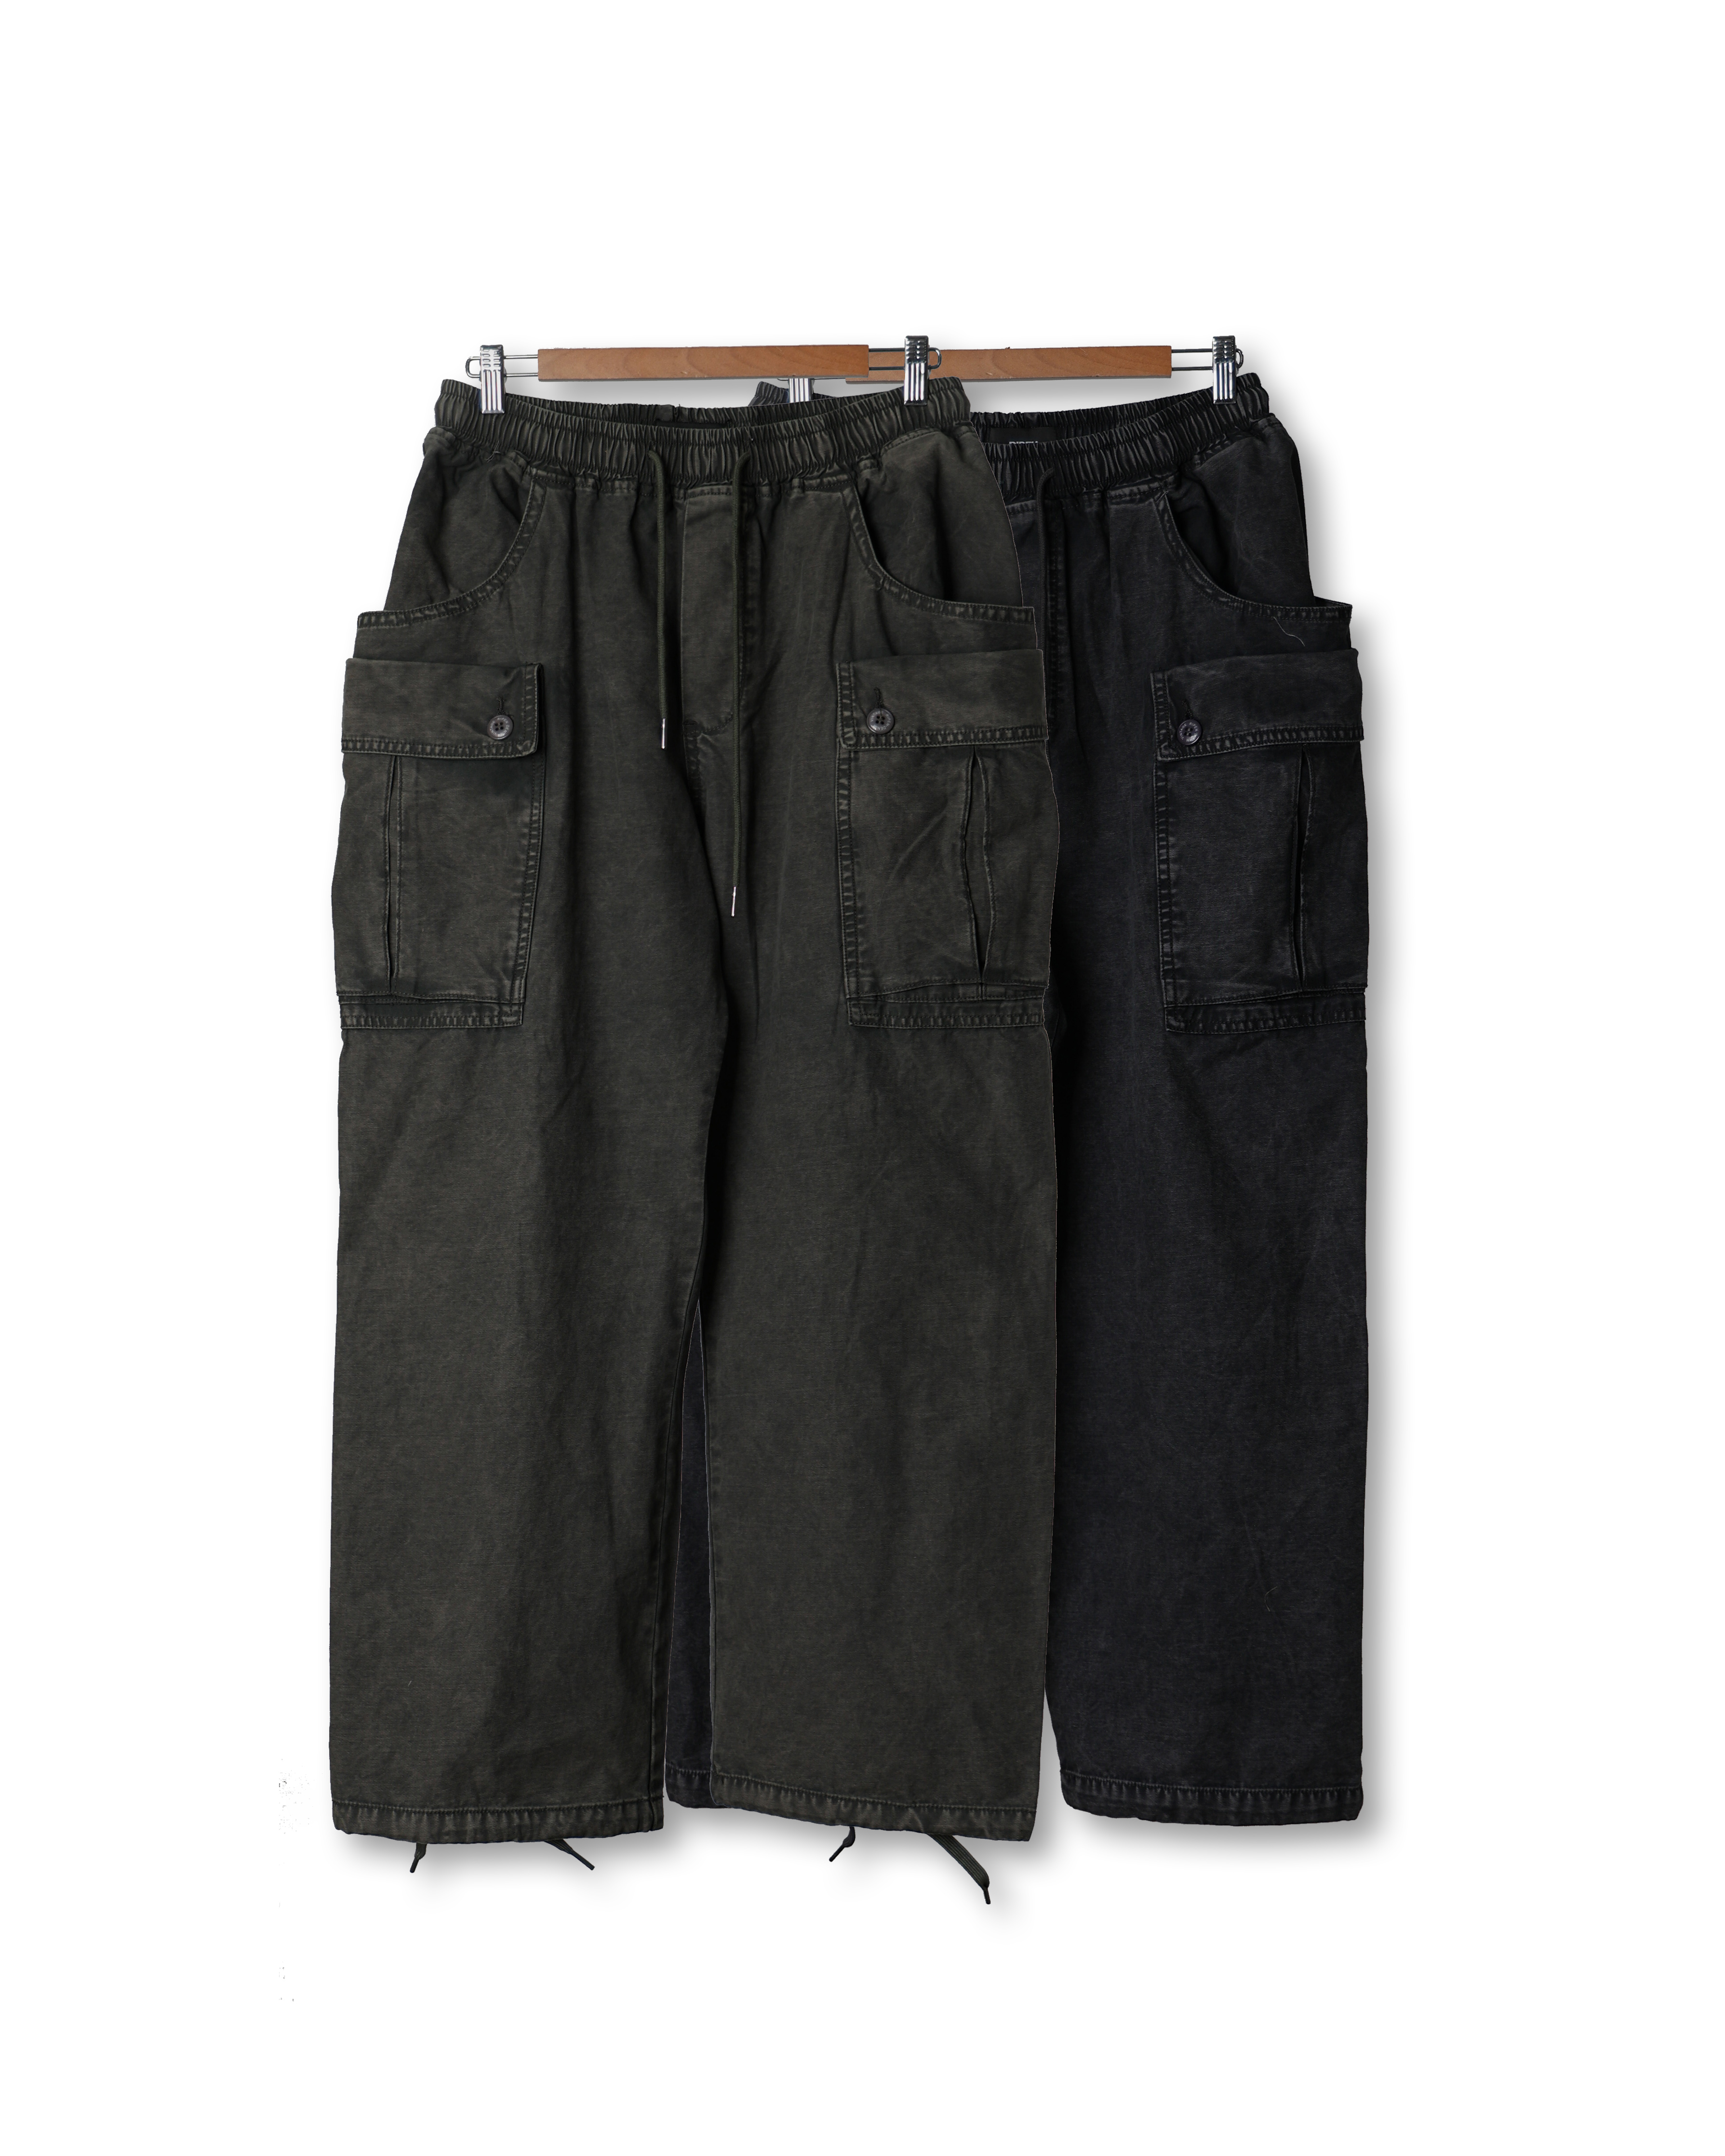 R.PENN R590 Garment Two Pocket Cargo Pants (Charcoal/Olive)